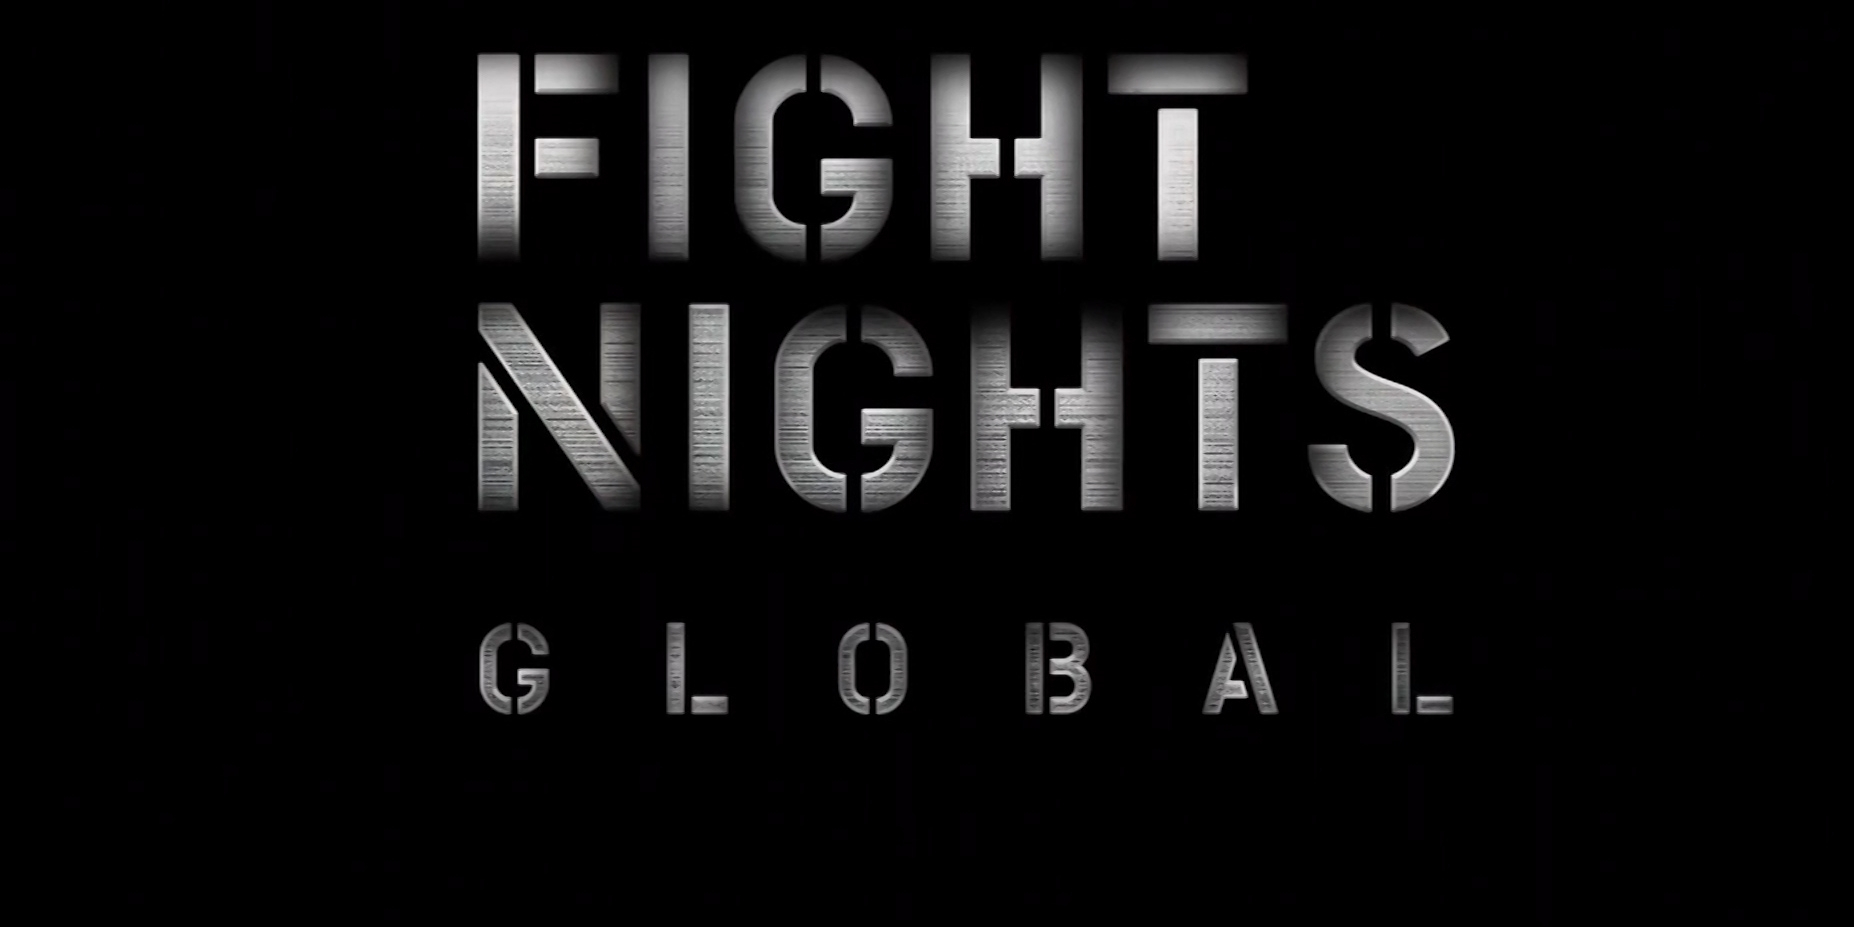 Файт Найт Глобал. Fight Night логотип. АМС файт Найт лого. AMC Fight Nights Global logo. Глобал найт